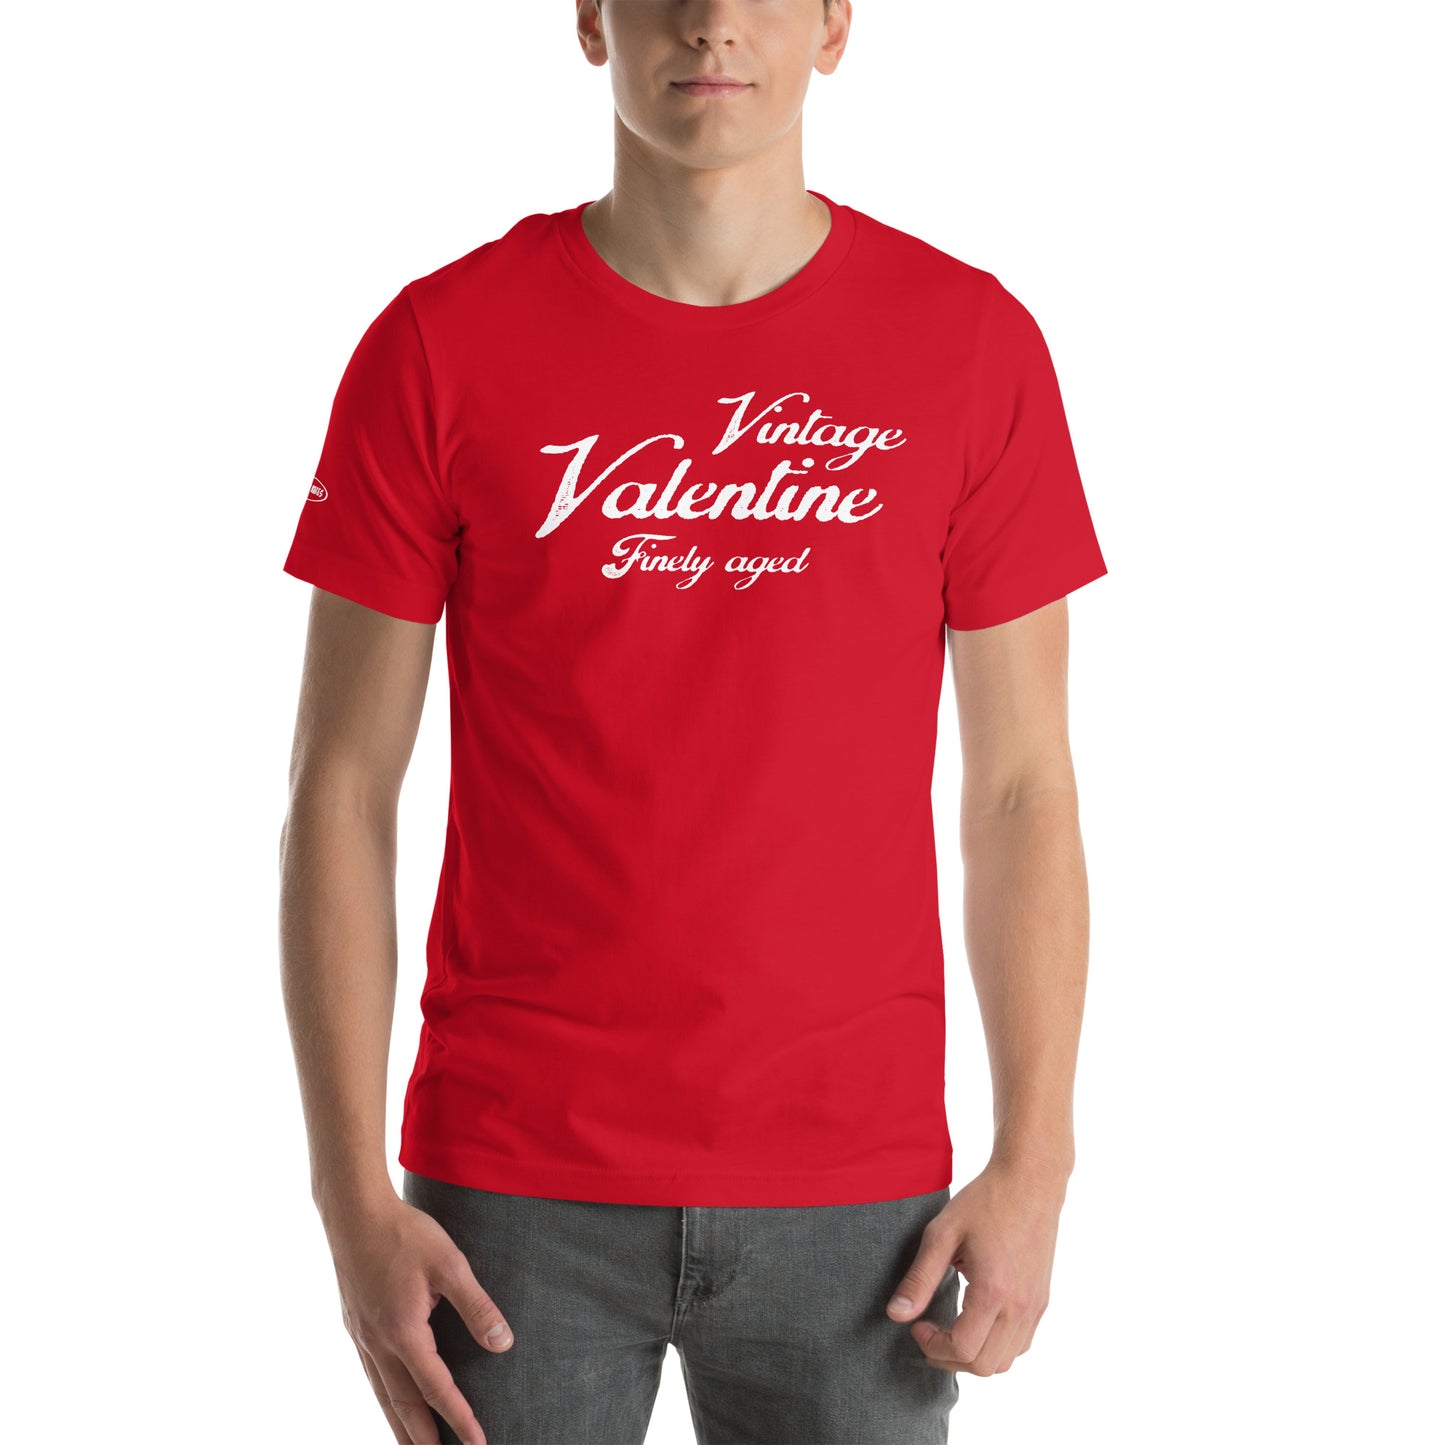 VALENTINES - Vintage Valentine Finely Aged